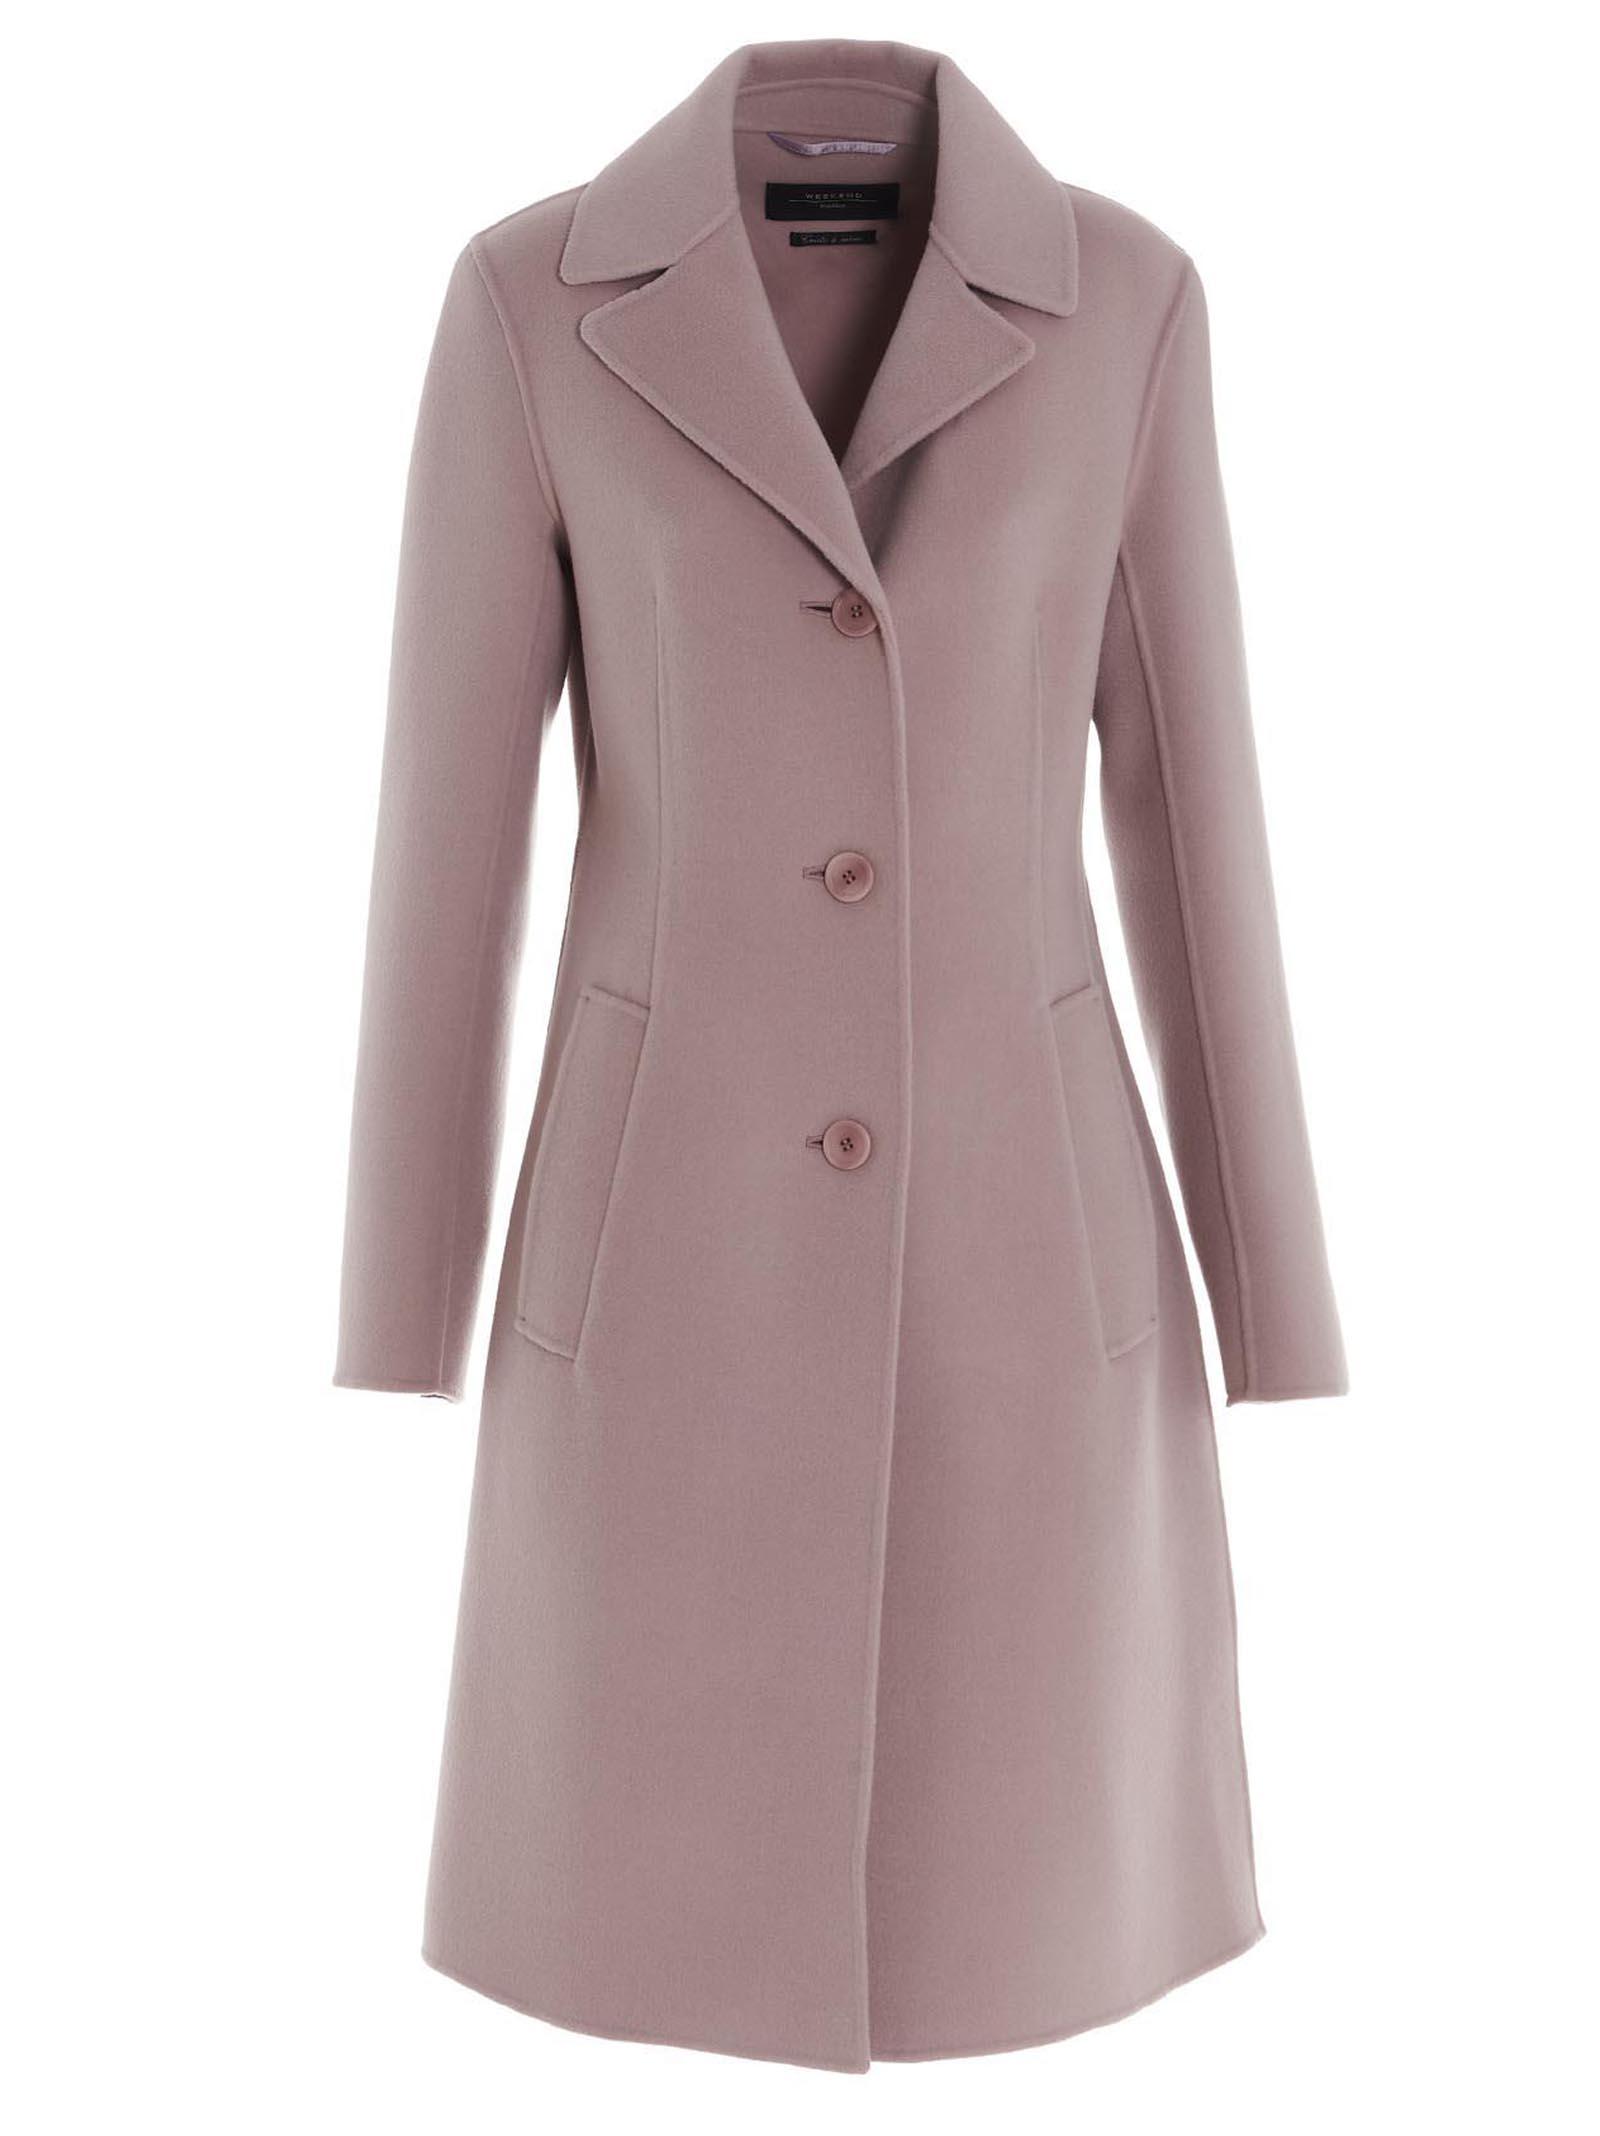 Weekend by Maxmara Wool Flared Coat in Pink - Lyst